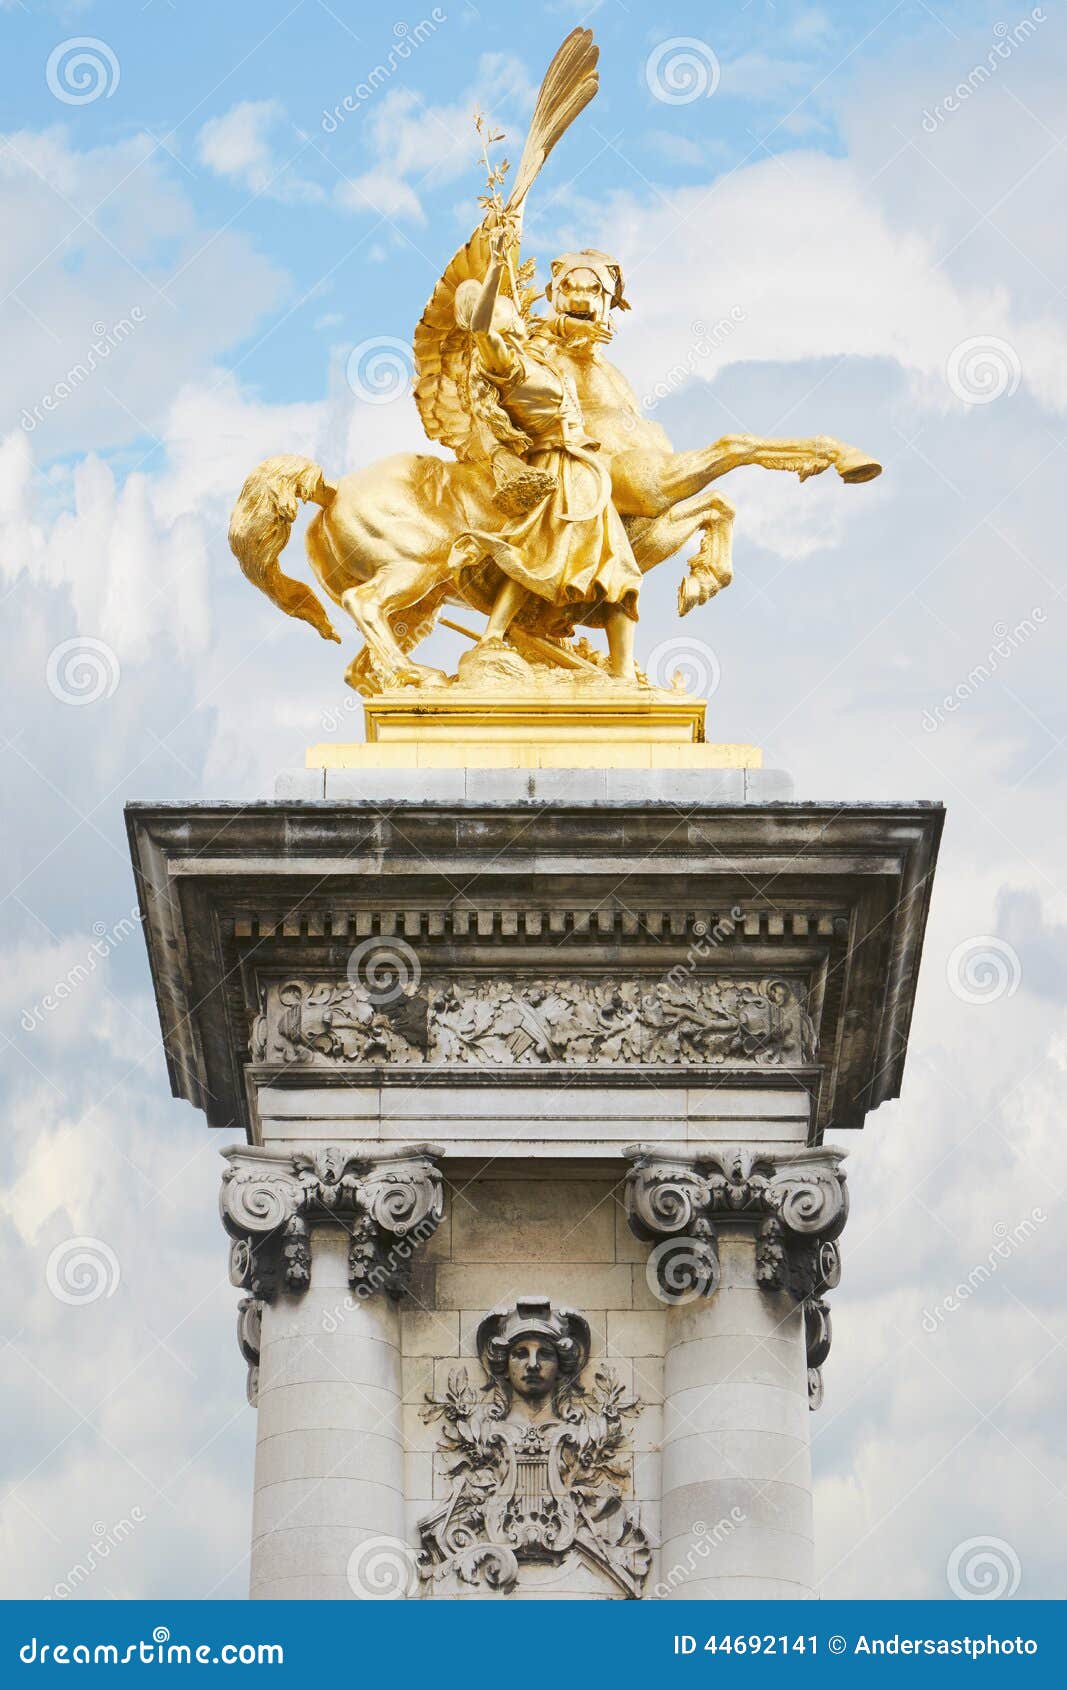 File:Golden Statue in Pont Alexandre III (Paris, France 